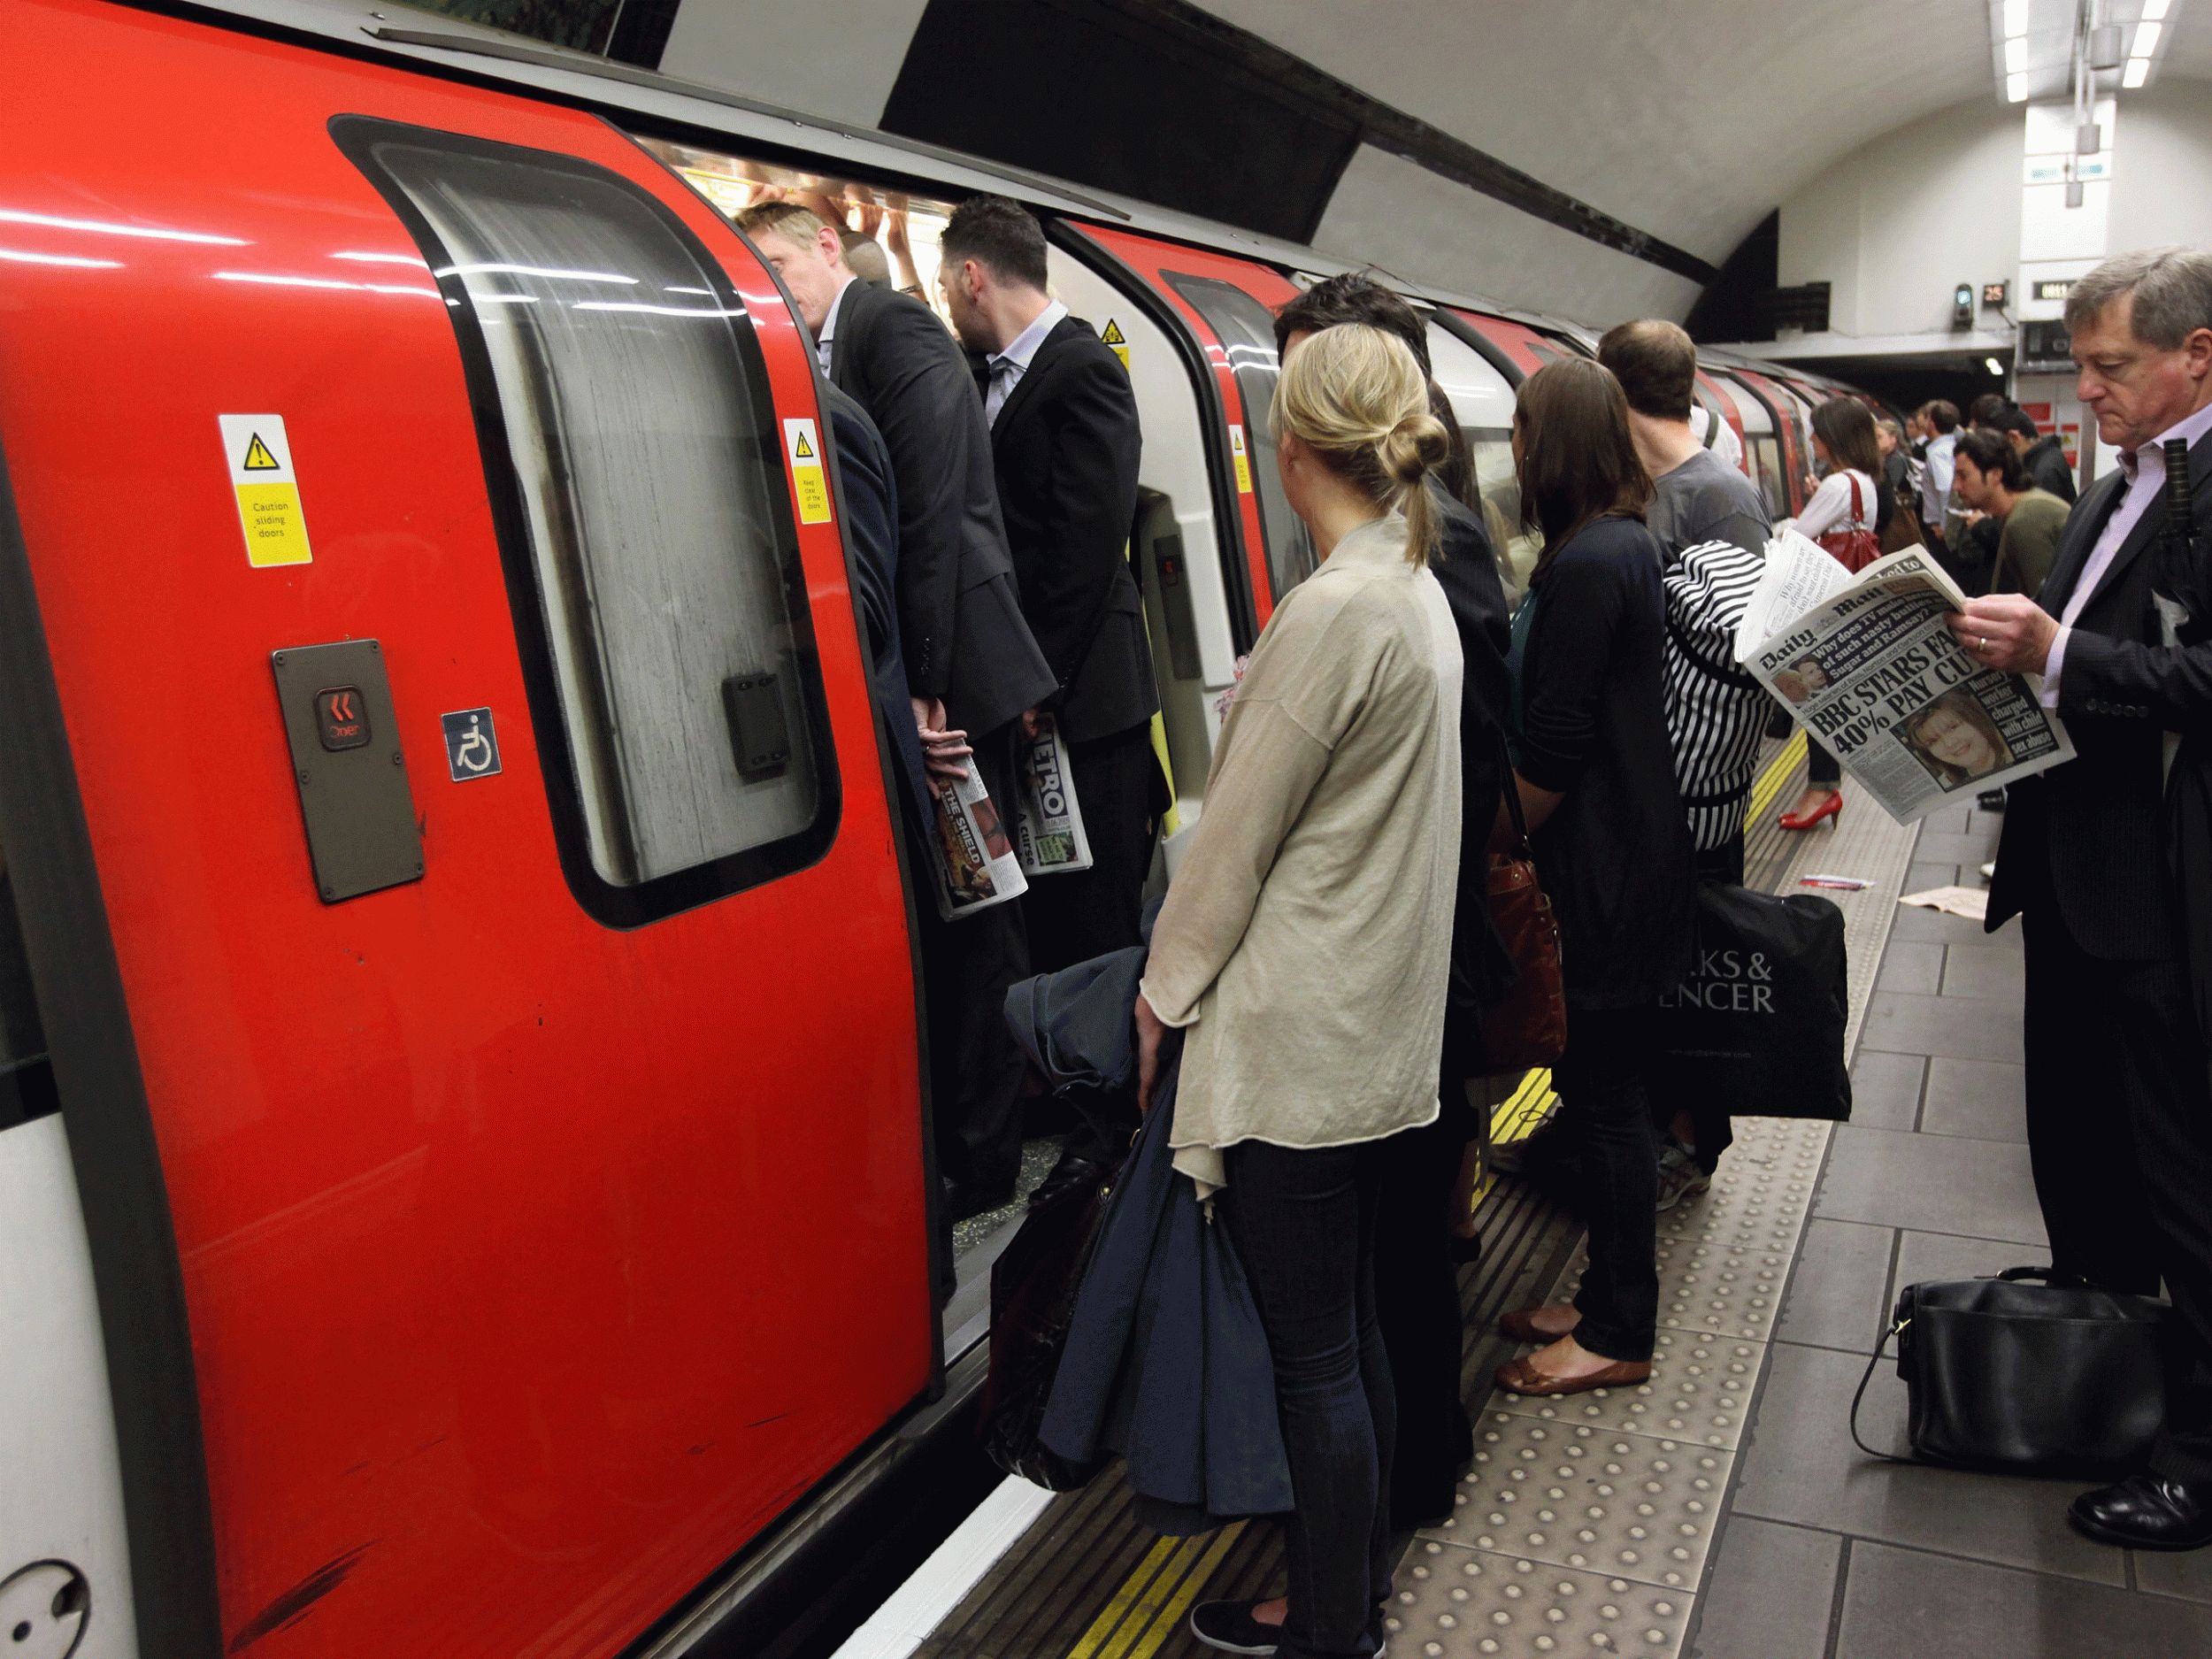 Last-ditch talks look set to fail to avert London Tube walkout